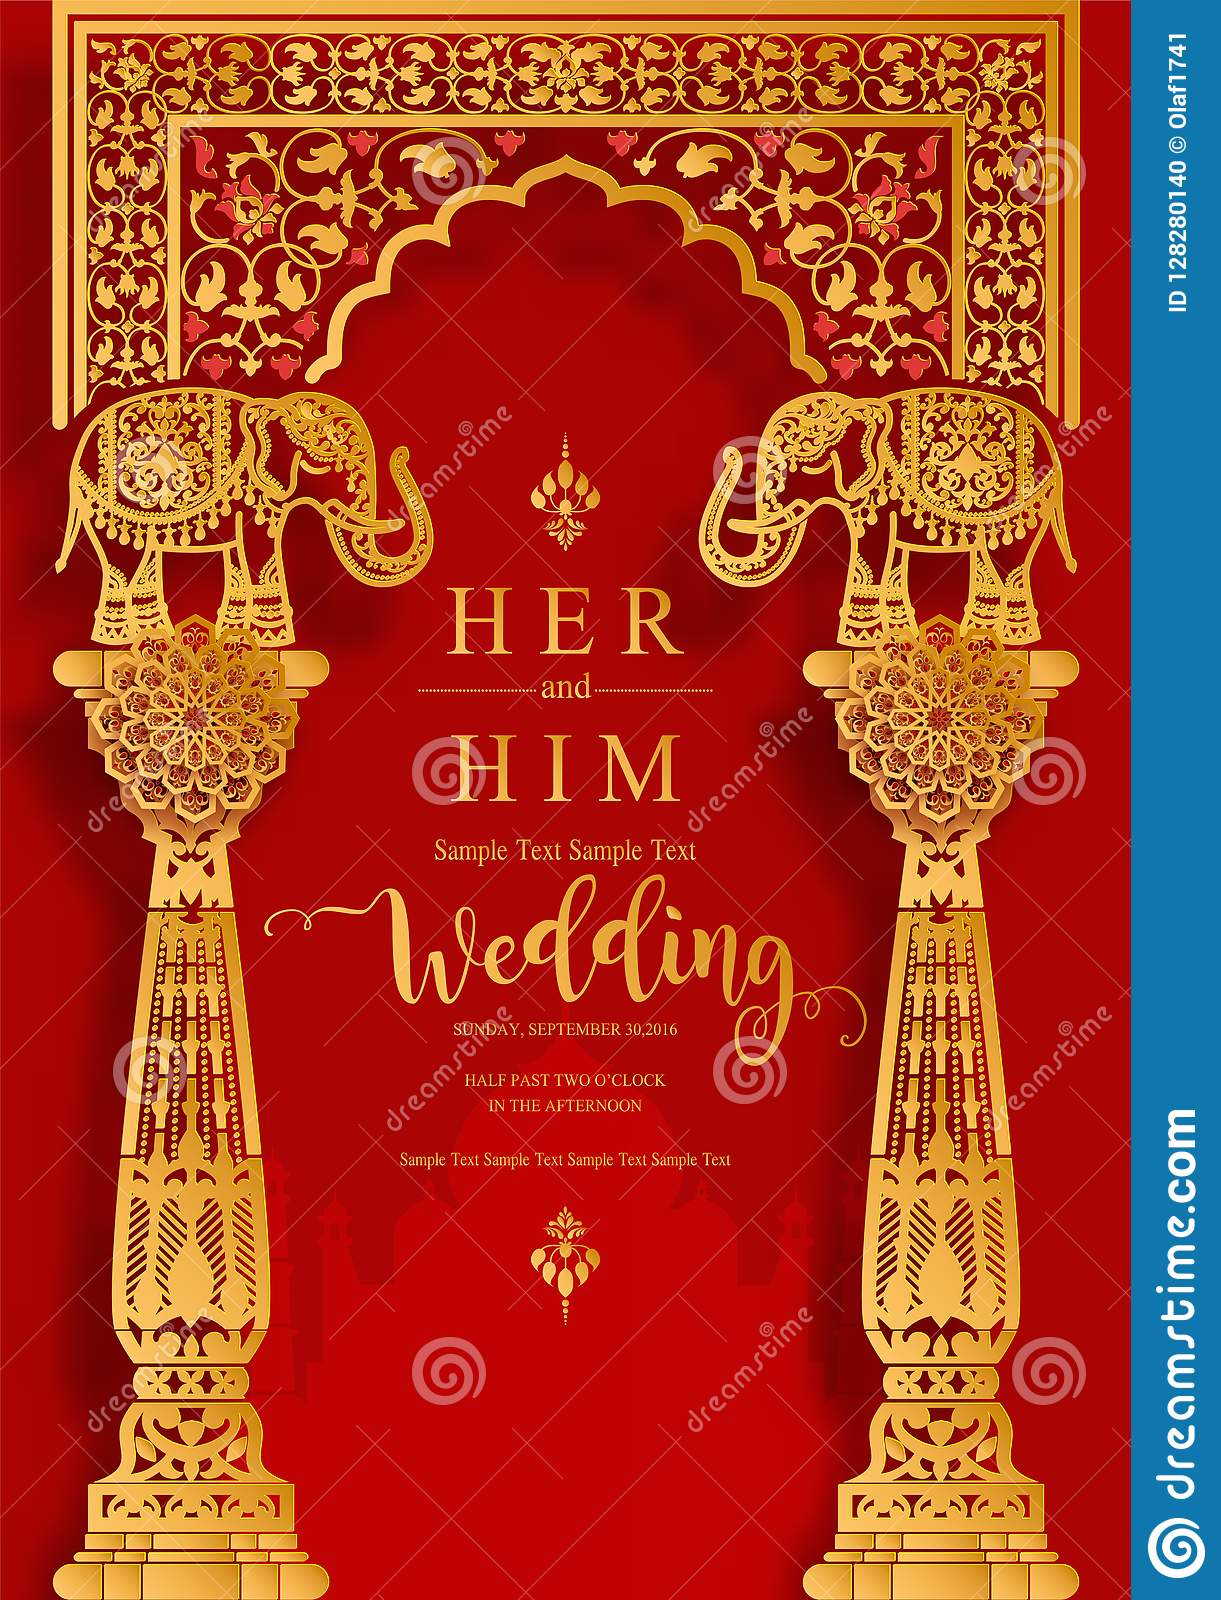 Indian Wedding Invitation Carddian Wedding Invitation Card Templates 